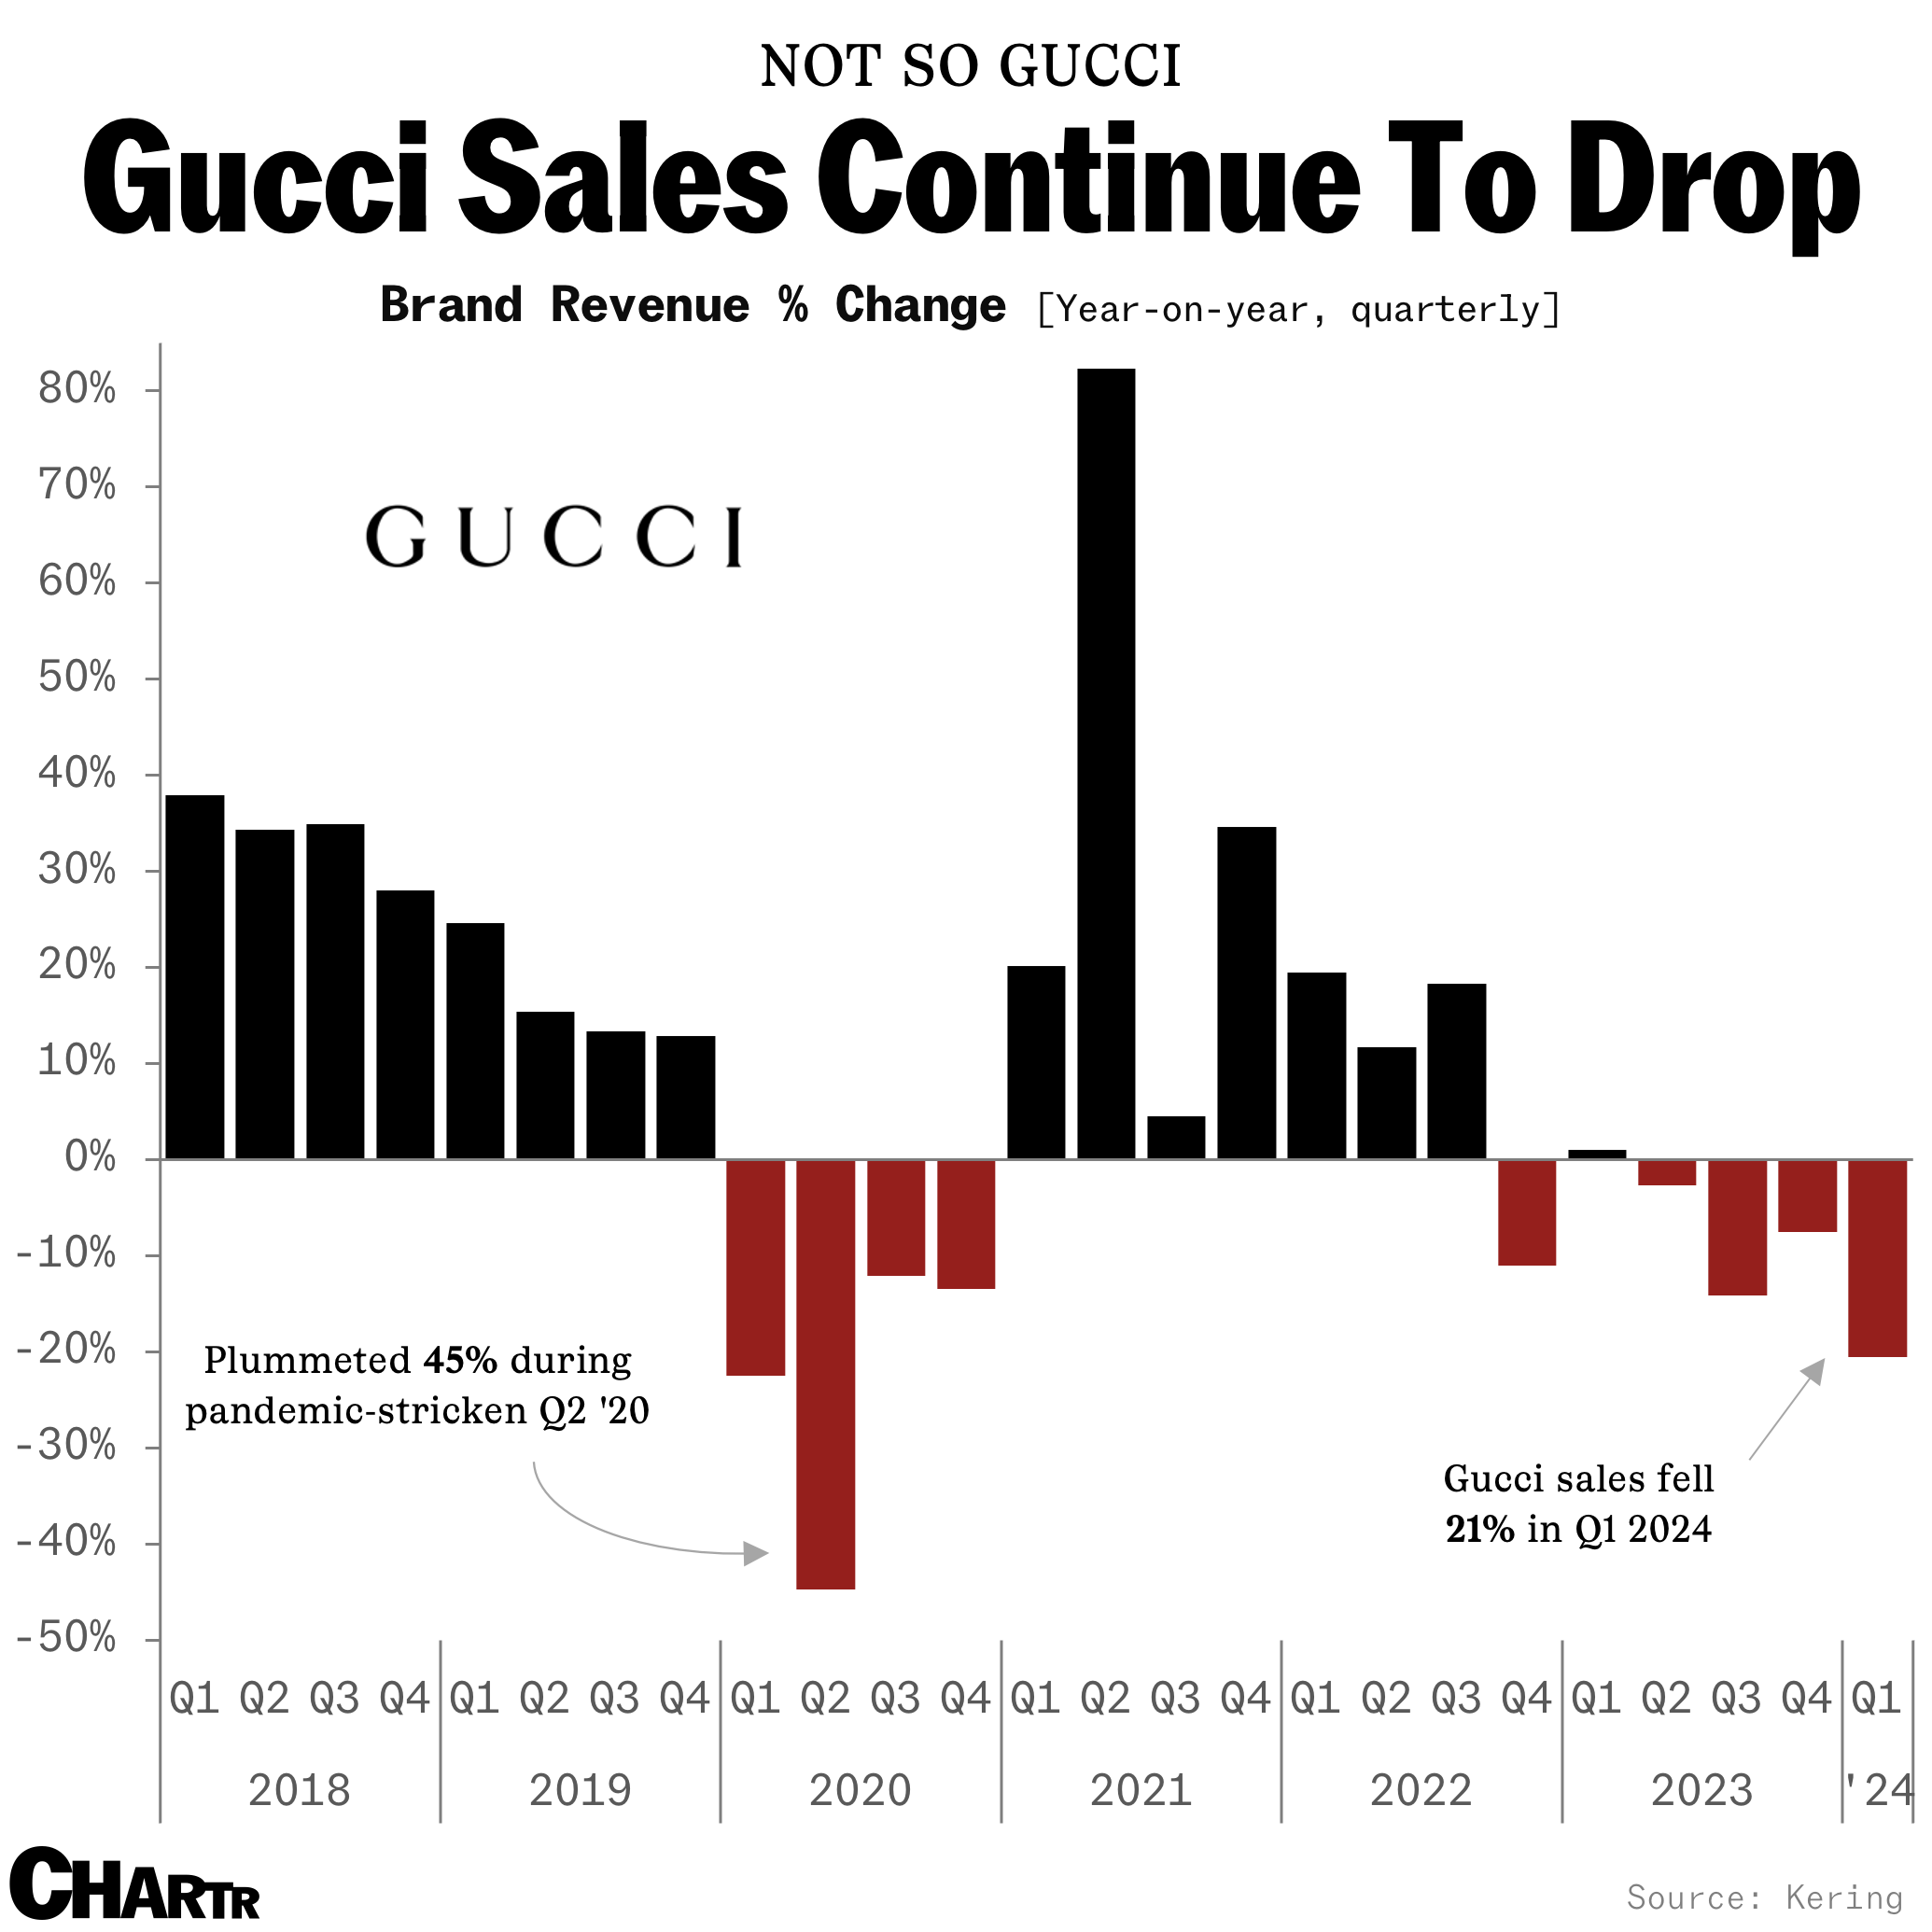 Gucci sales